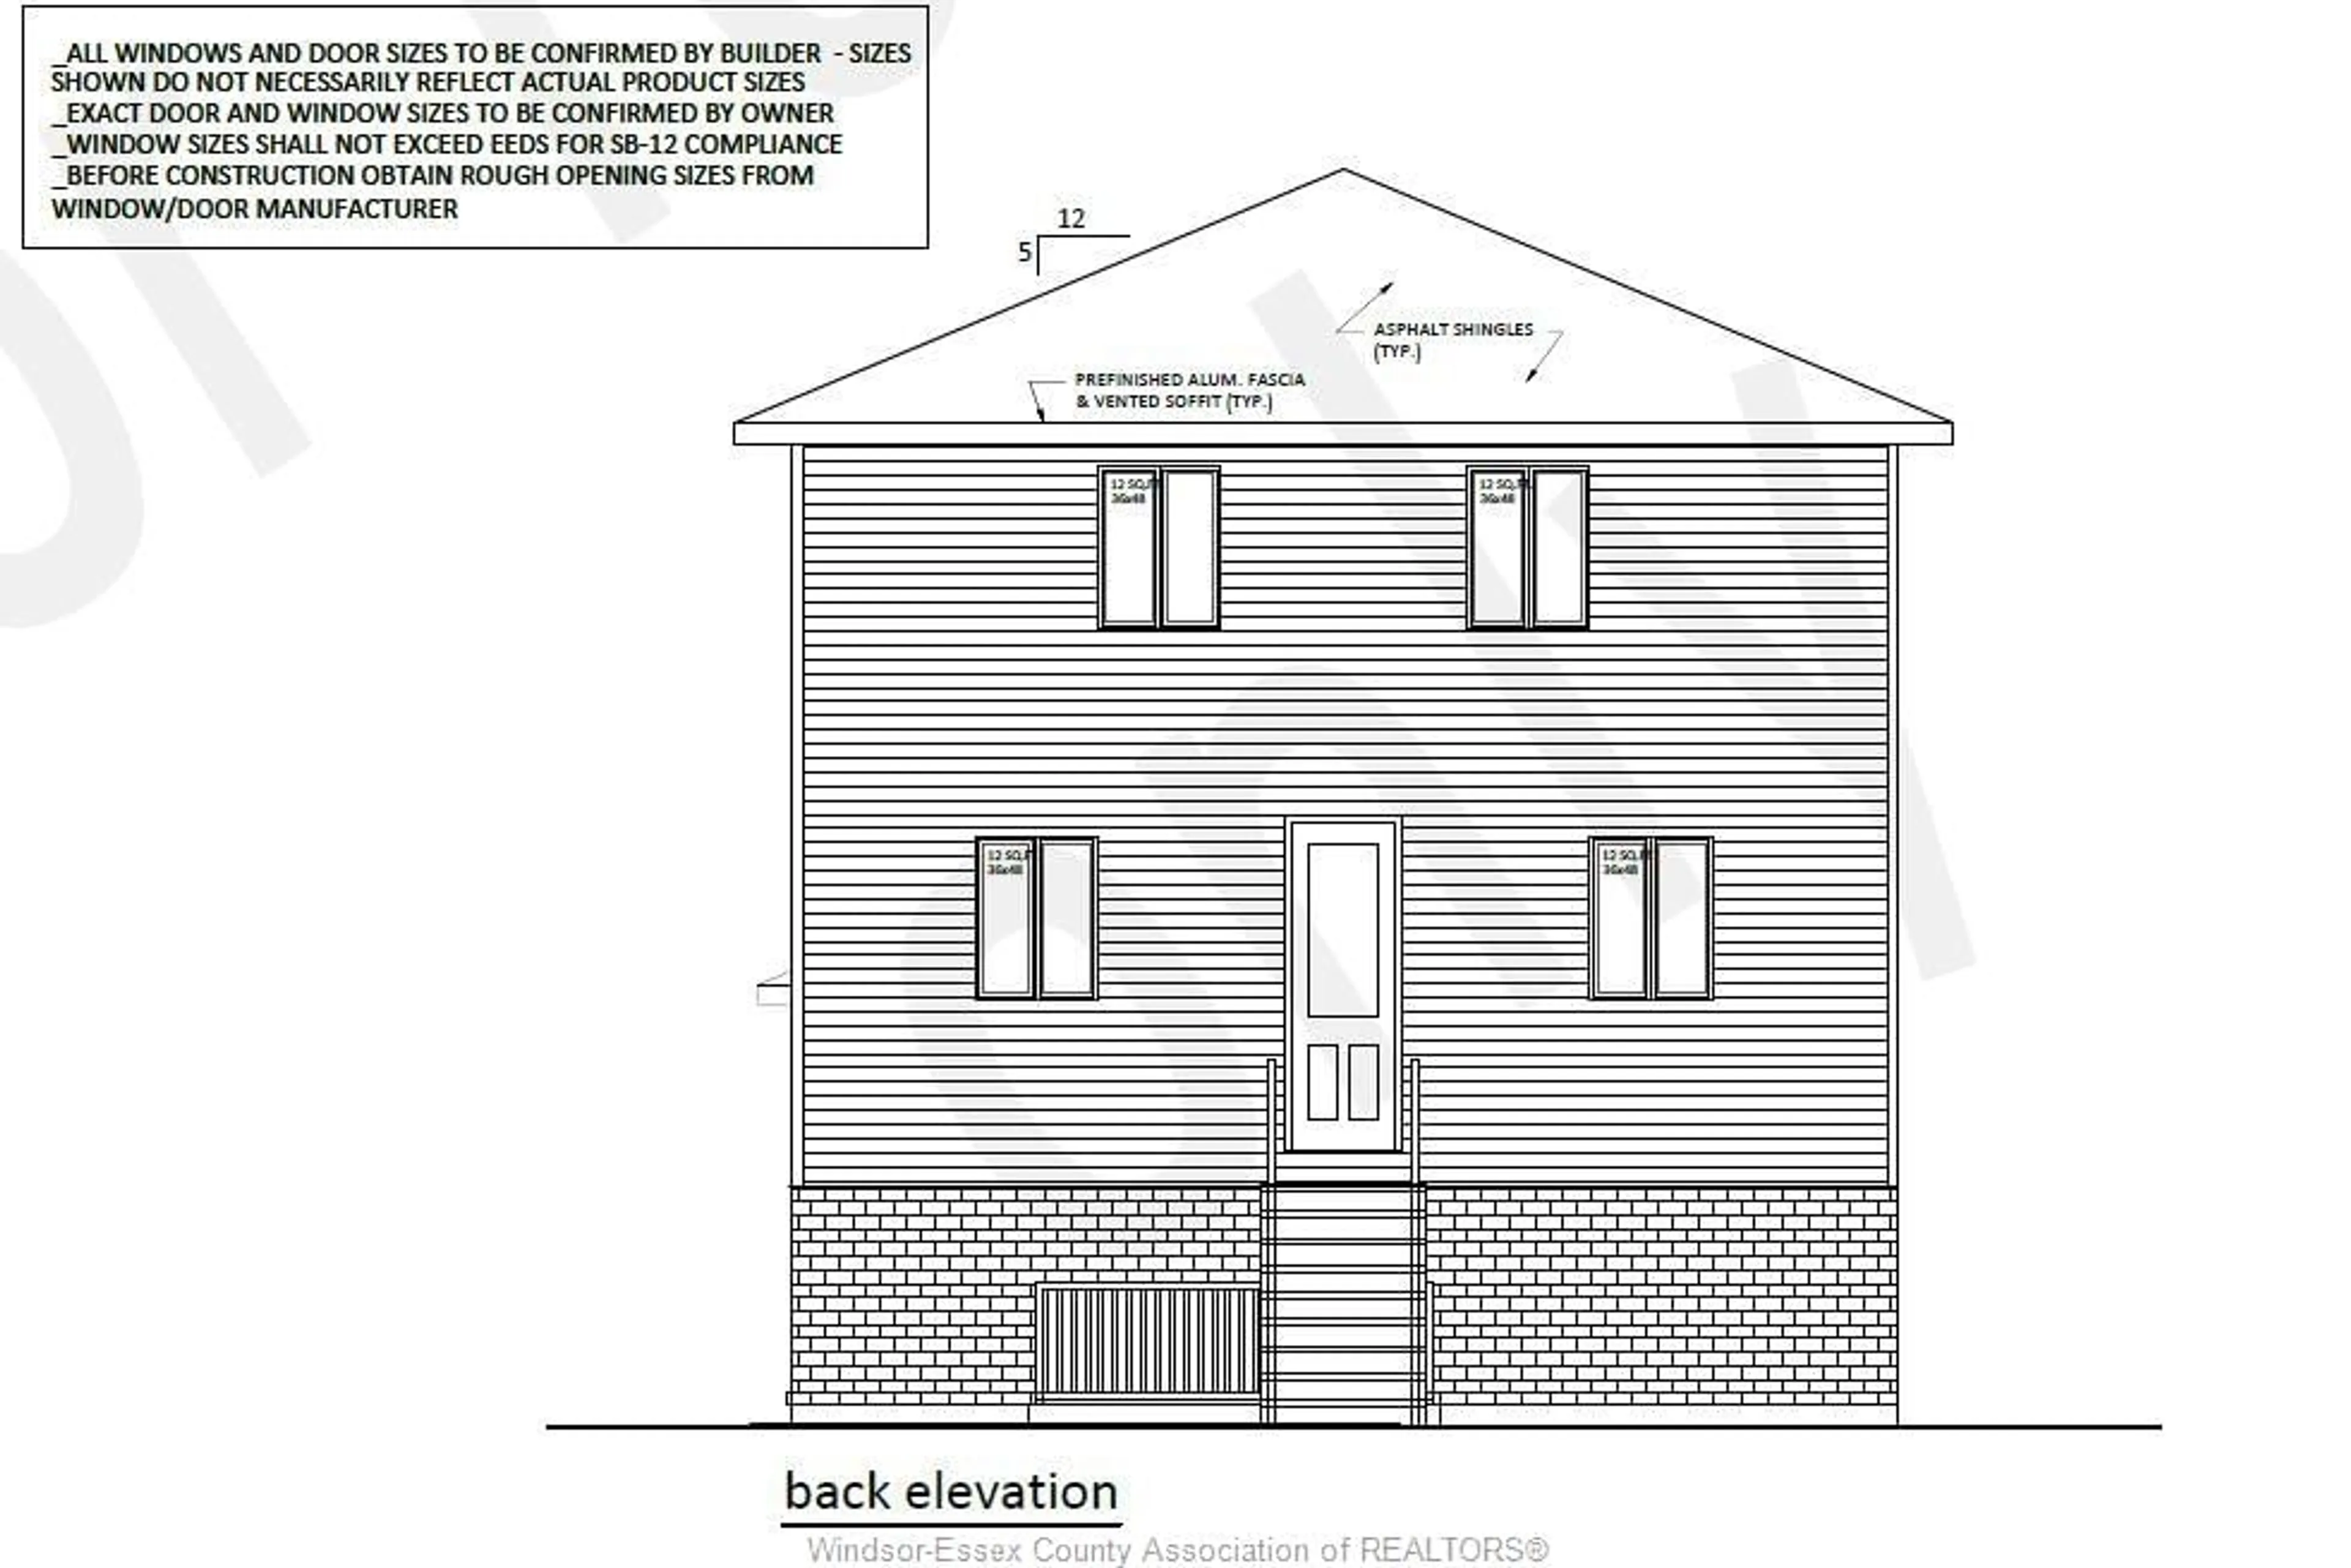 Frontside or backside of a home for 430 KARL Pl, Windsor Ontario N9A 5W1